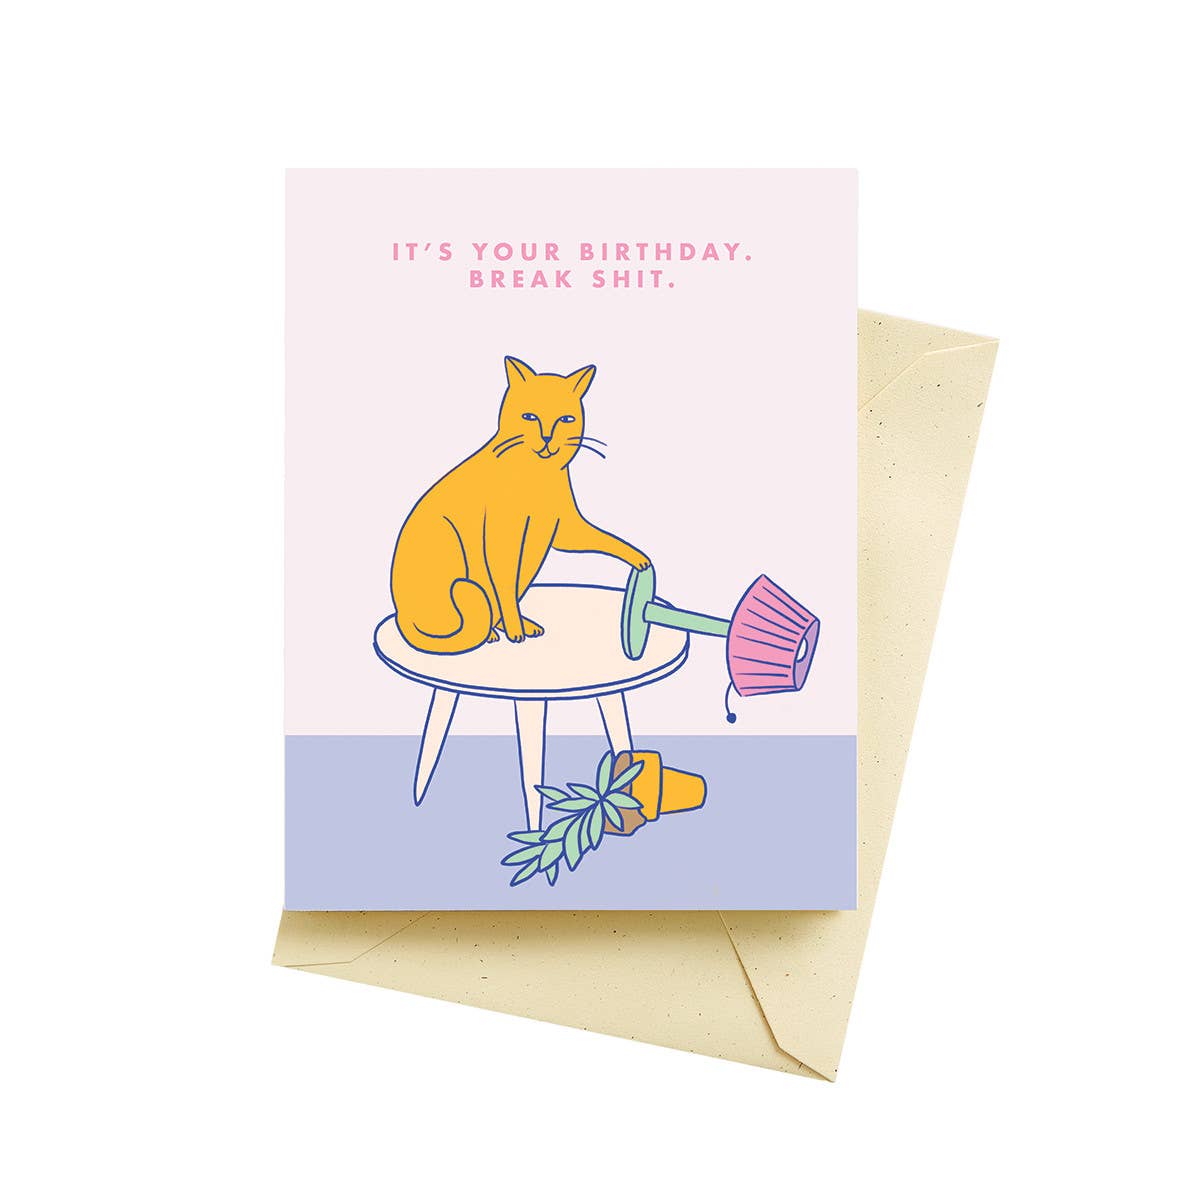 Break Shit Cat Birthday Card